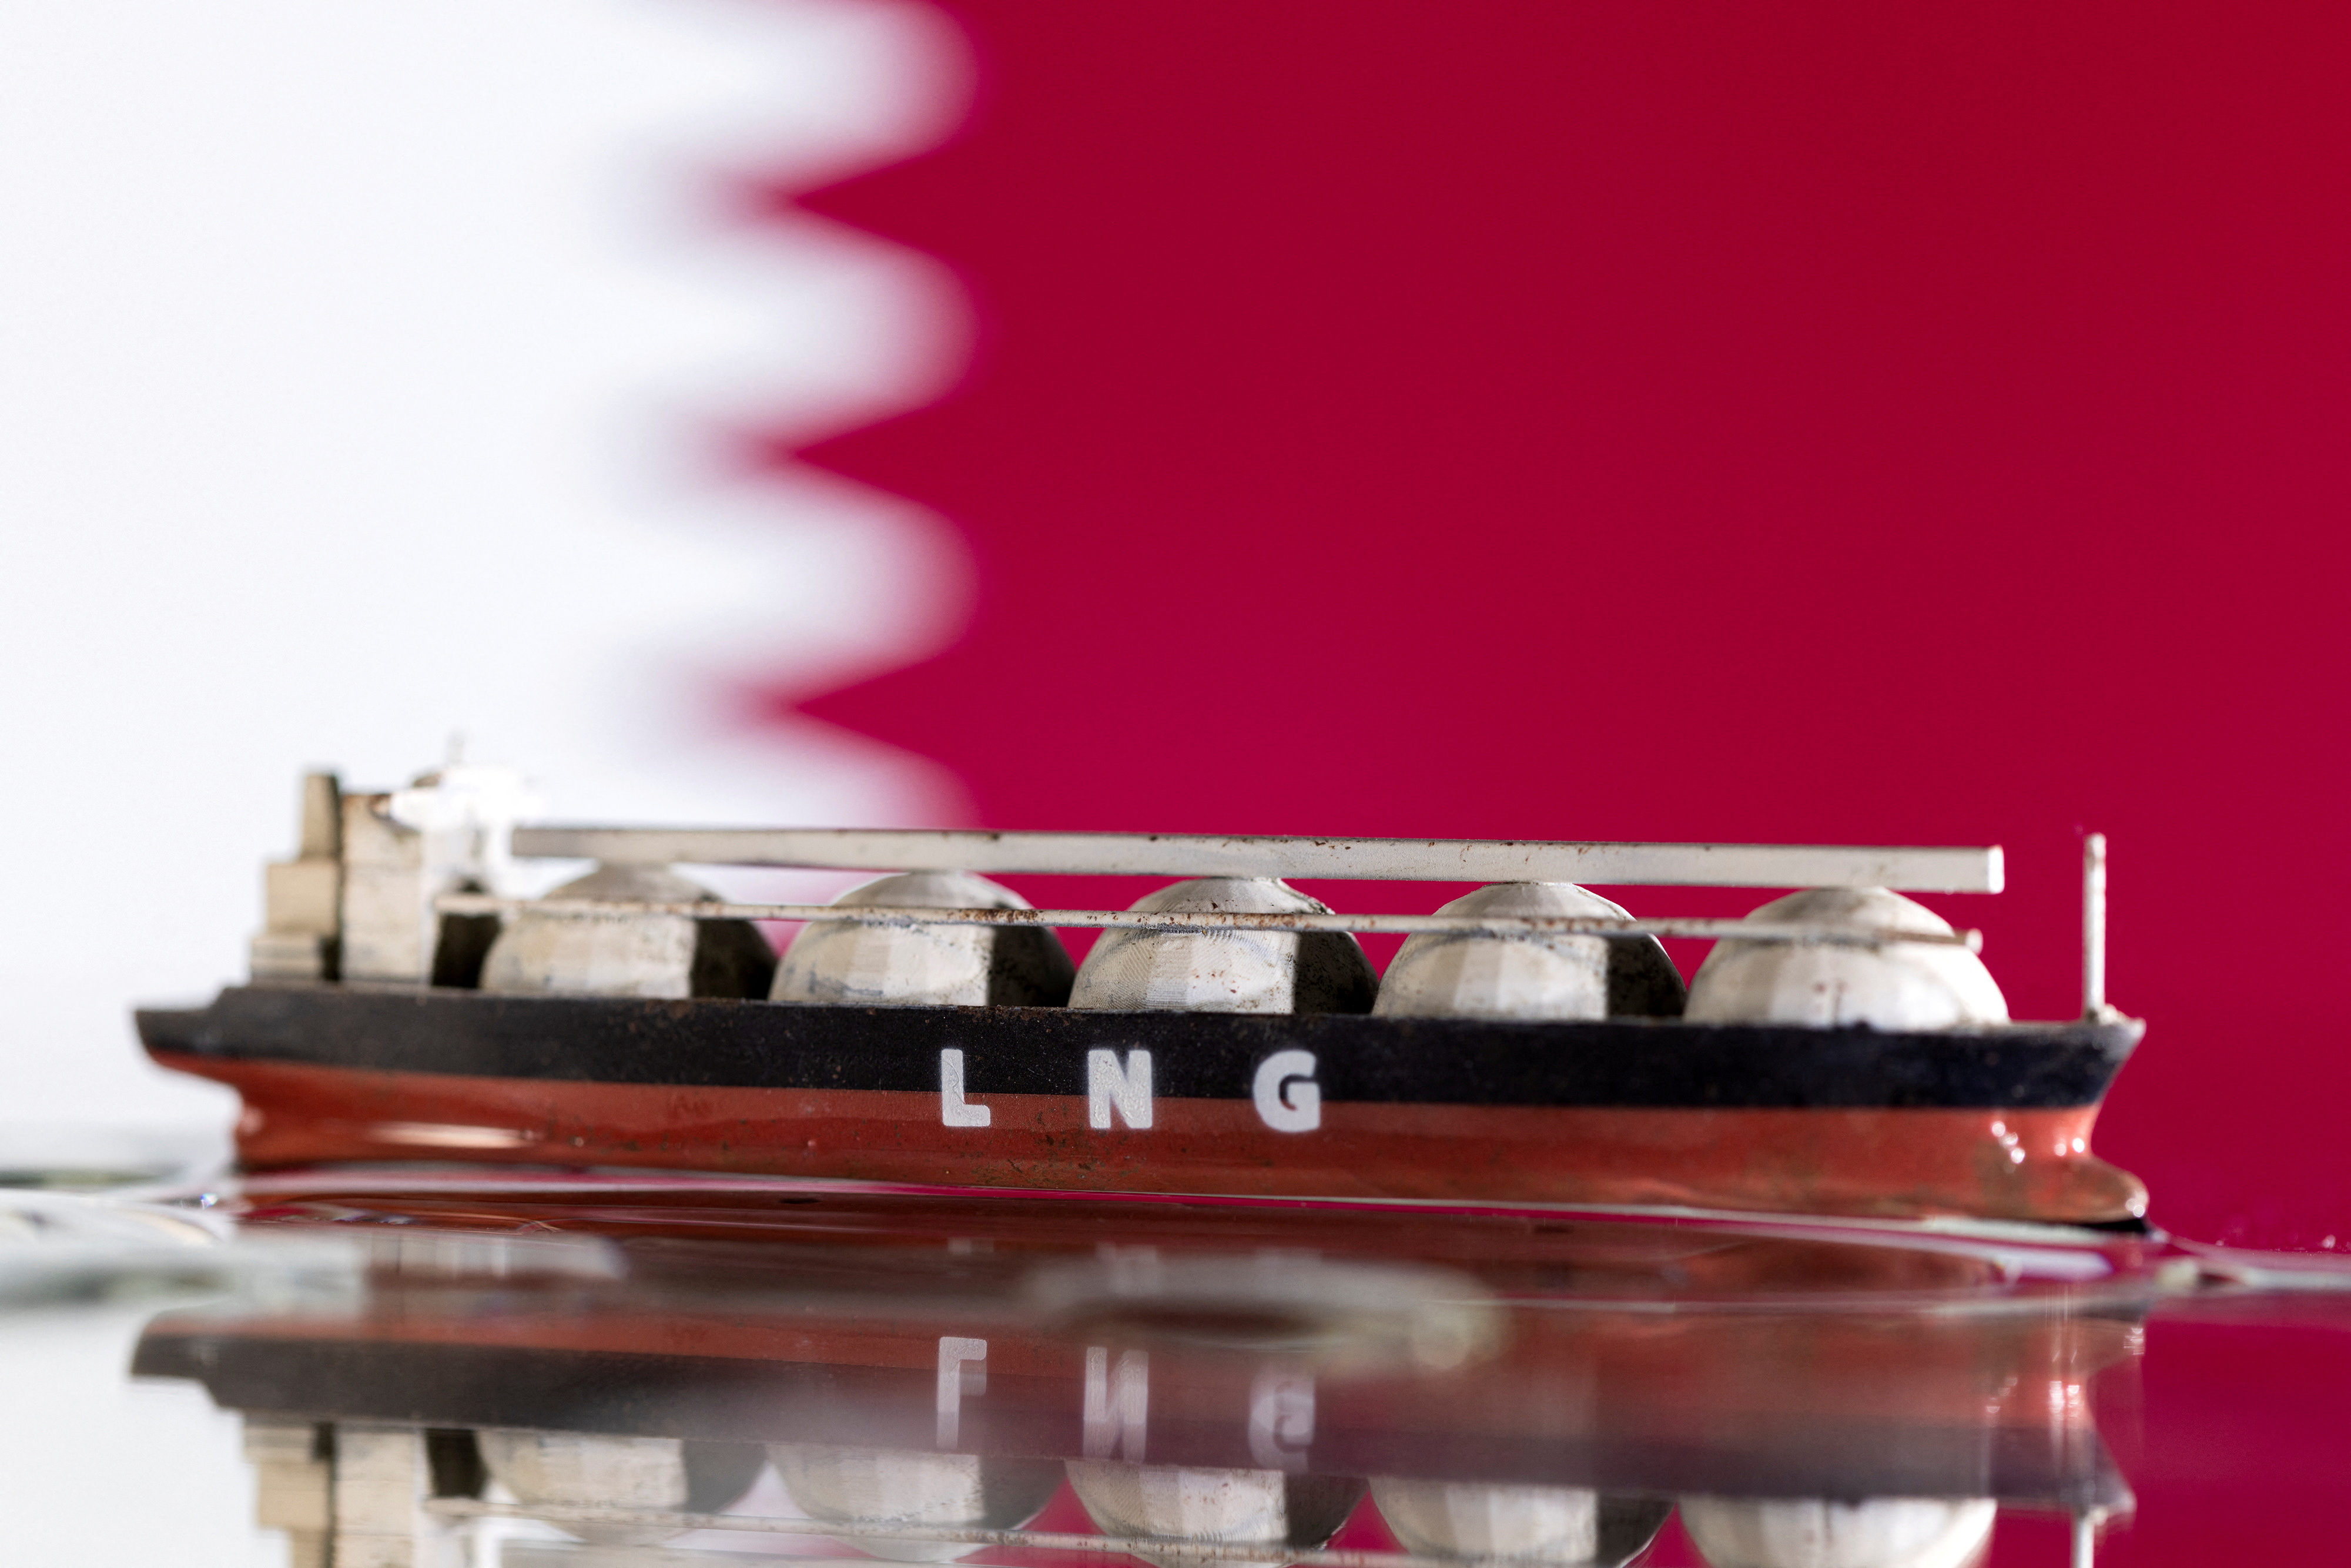 Illustration shows model of LNG tanker and Qatar's flag